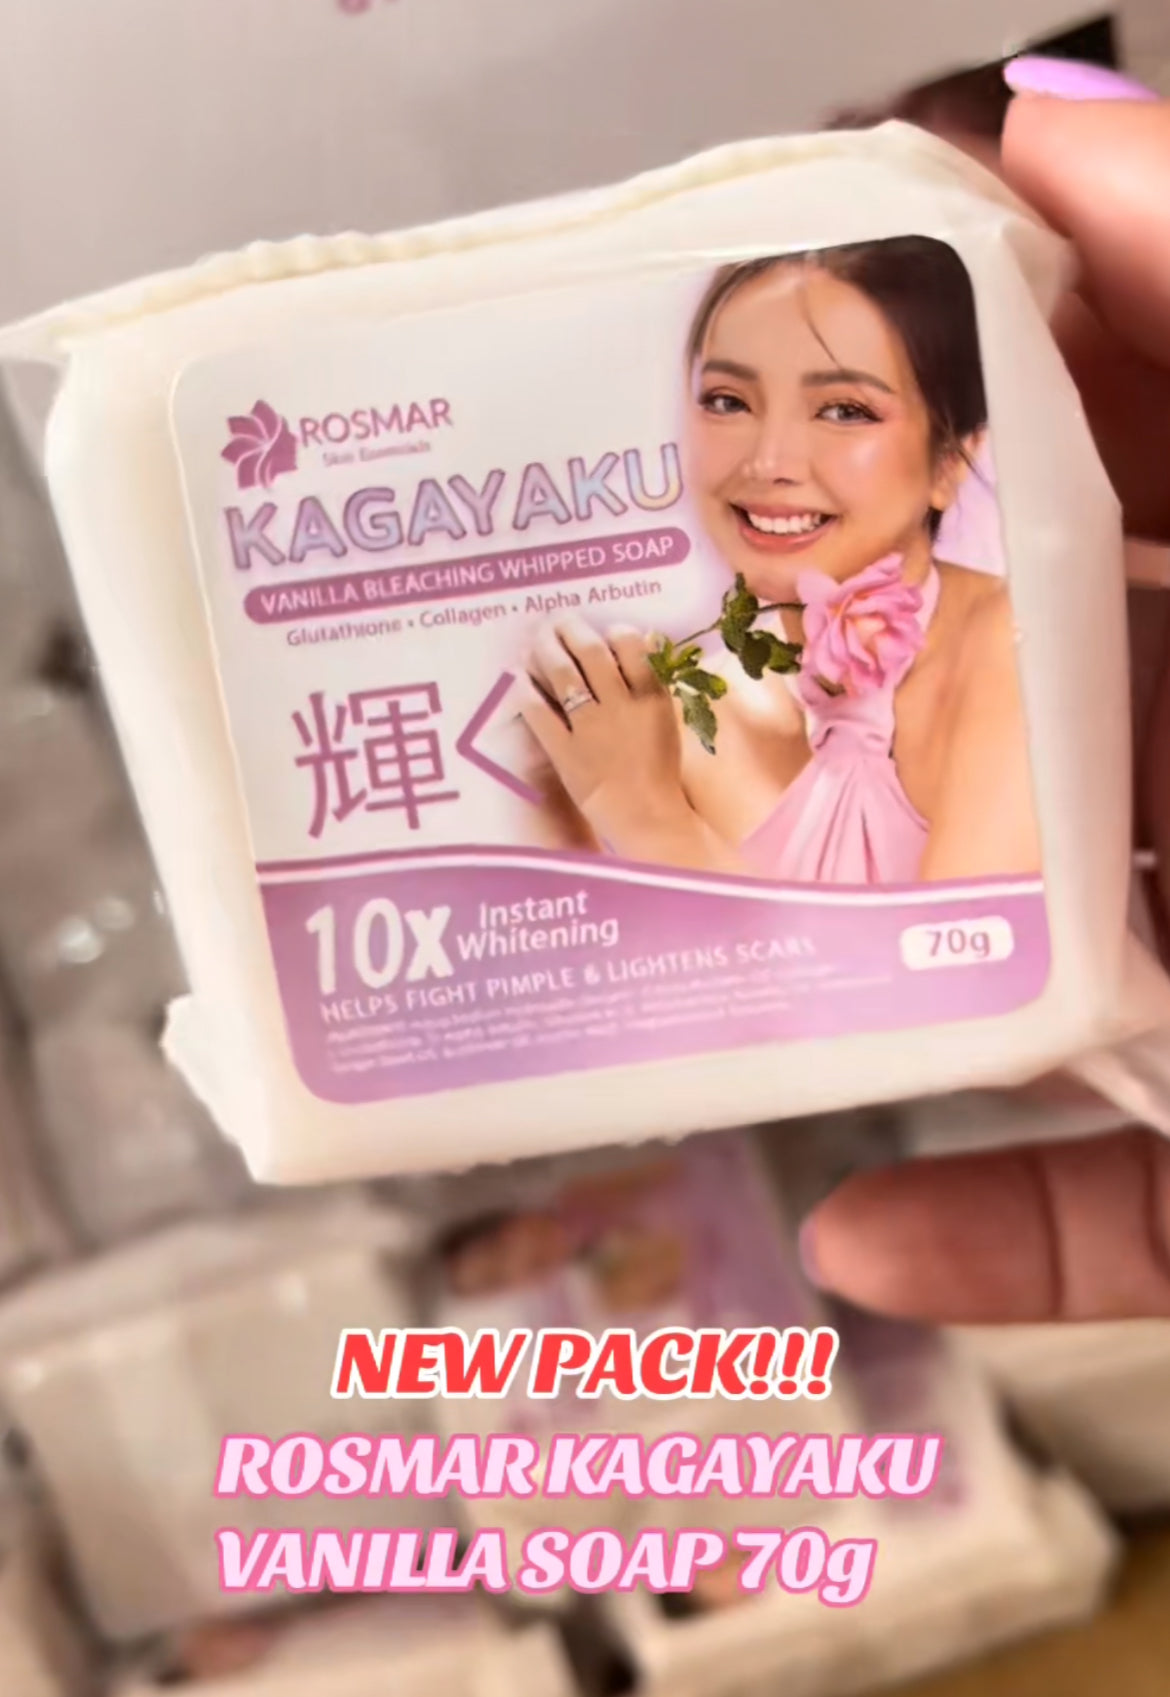 Rosmar Kagayaku Bleaching Whipped (Vanilla Scent) Soap 70g - NEW PACKAGING